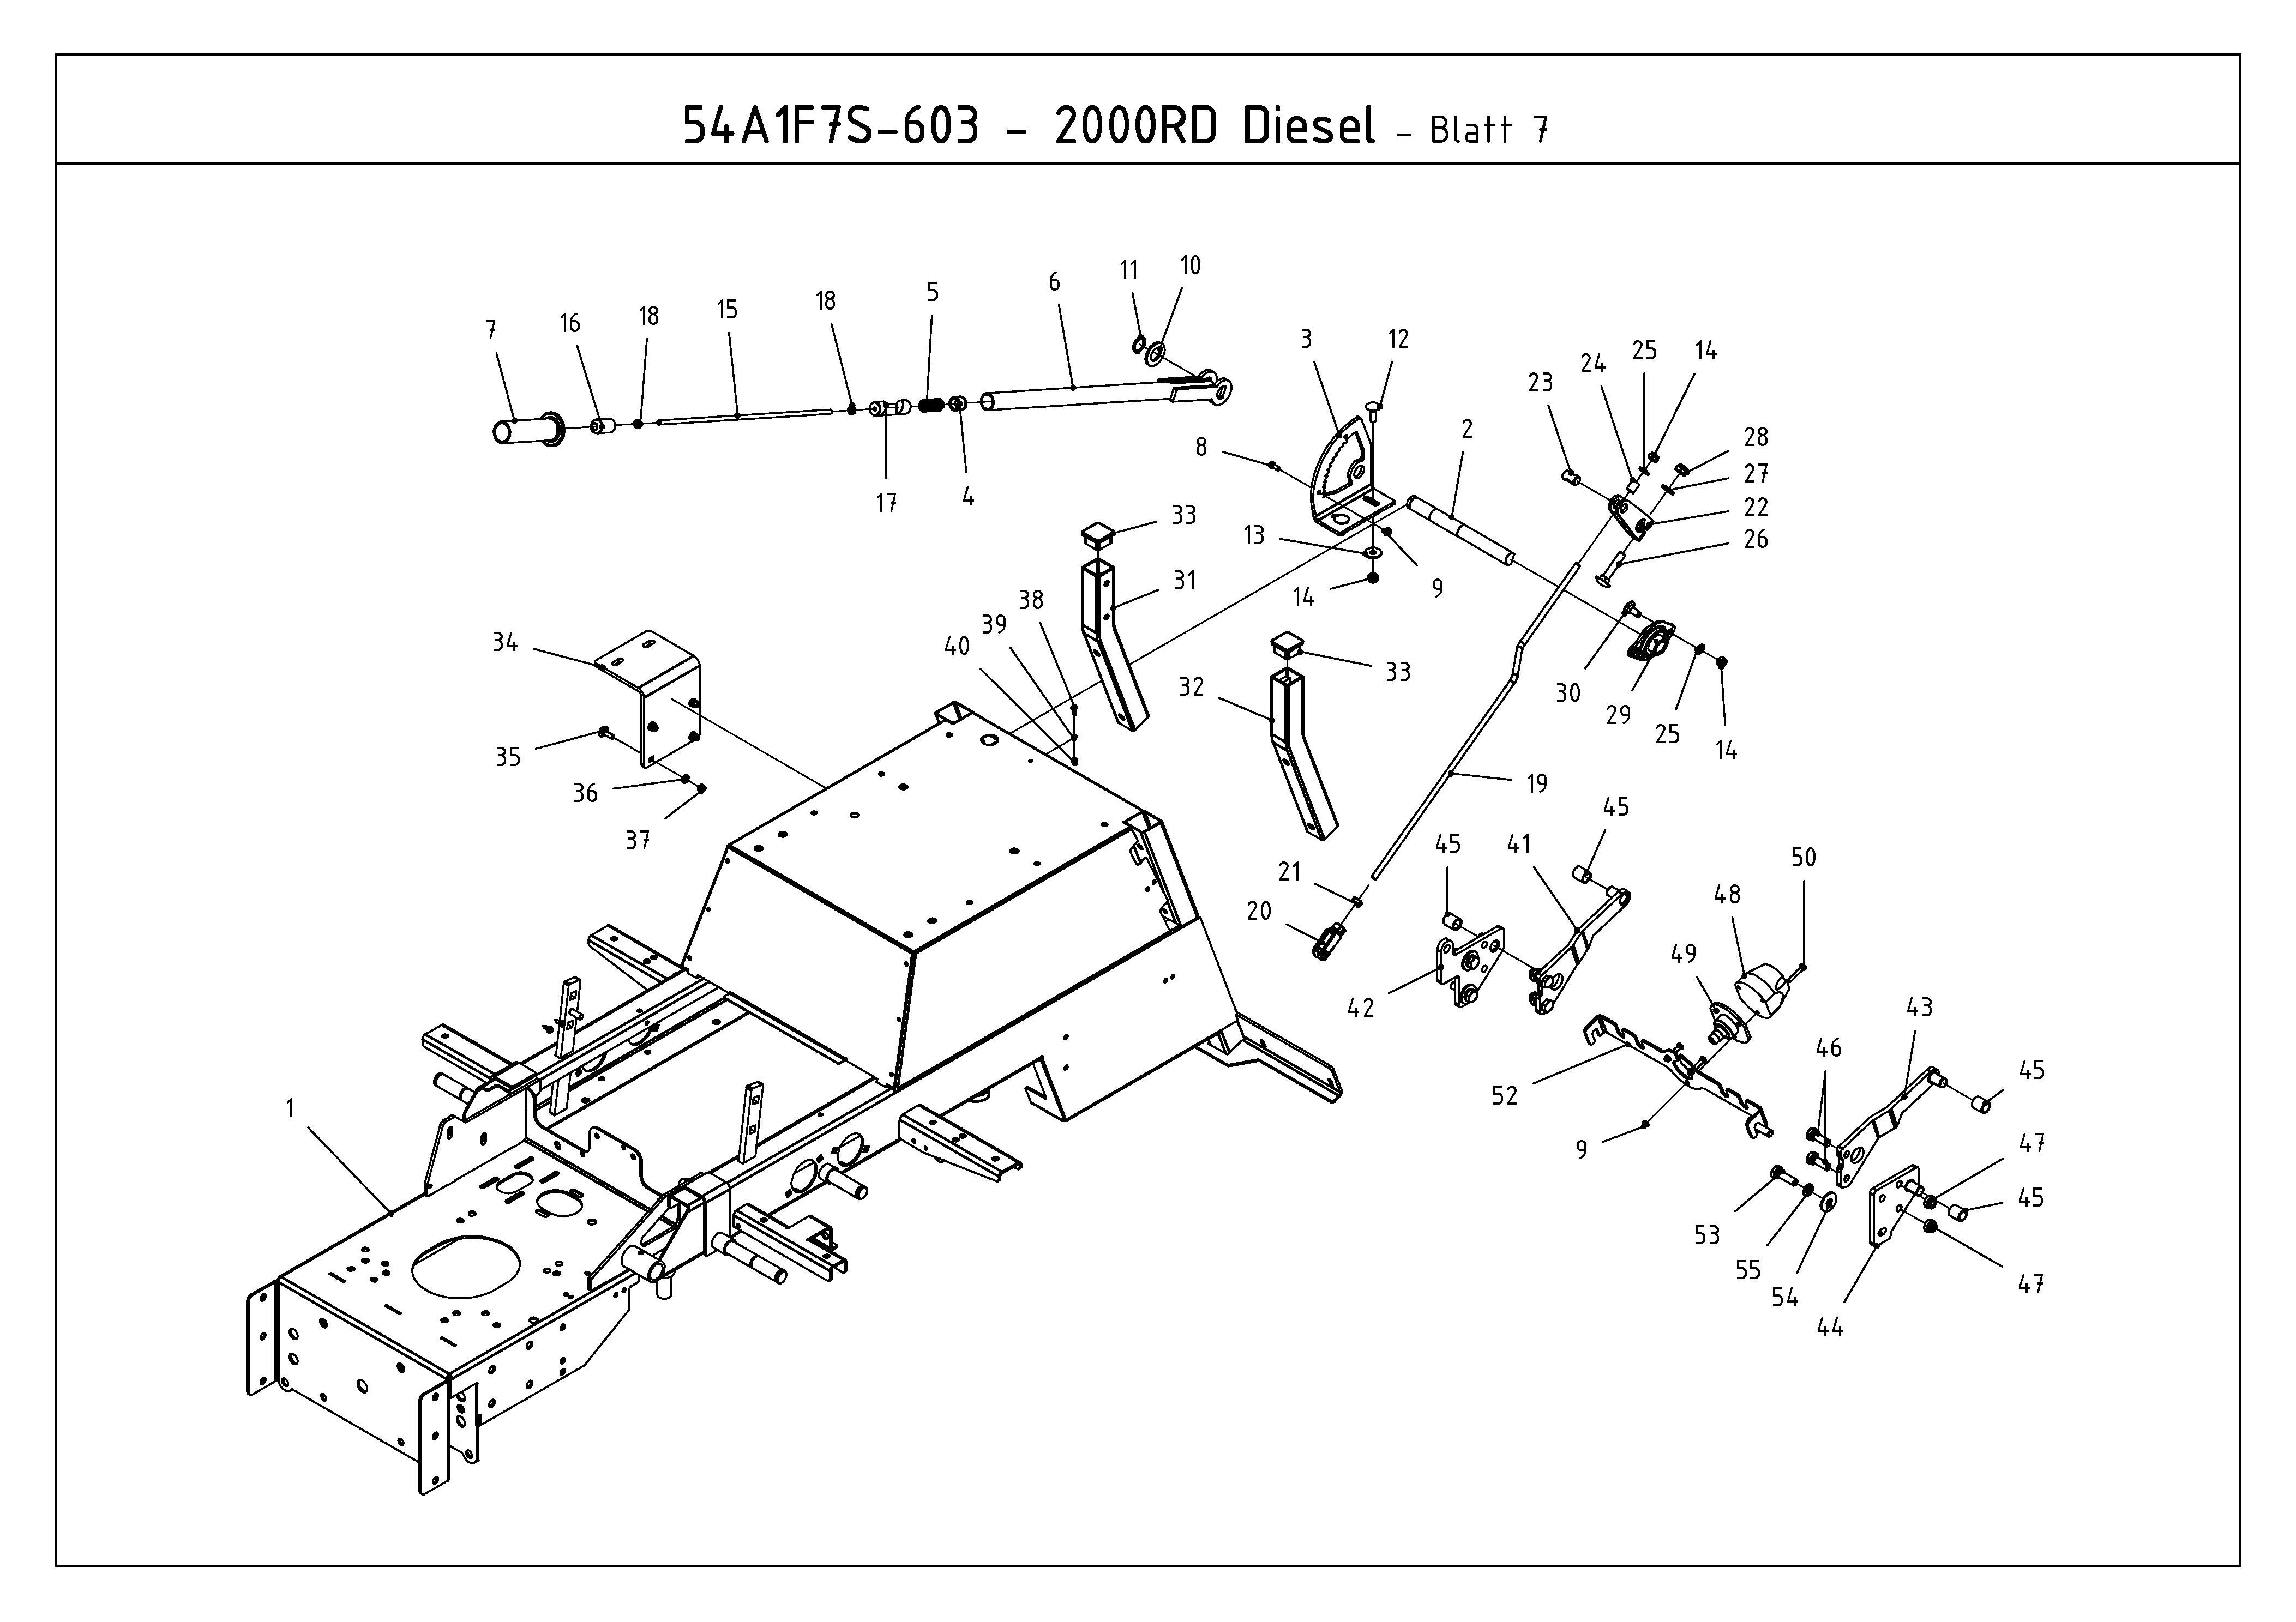 Cub Cadet, Kompakttraktoren, CC 2000 RD, 54A1F7S-603 (2009), Mähwerksaushebung, Rahmen, MTD Ersatzteil-Zeichnungen